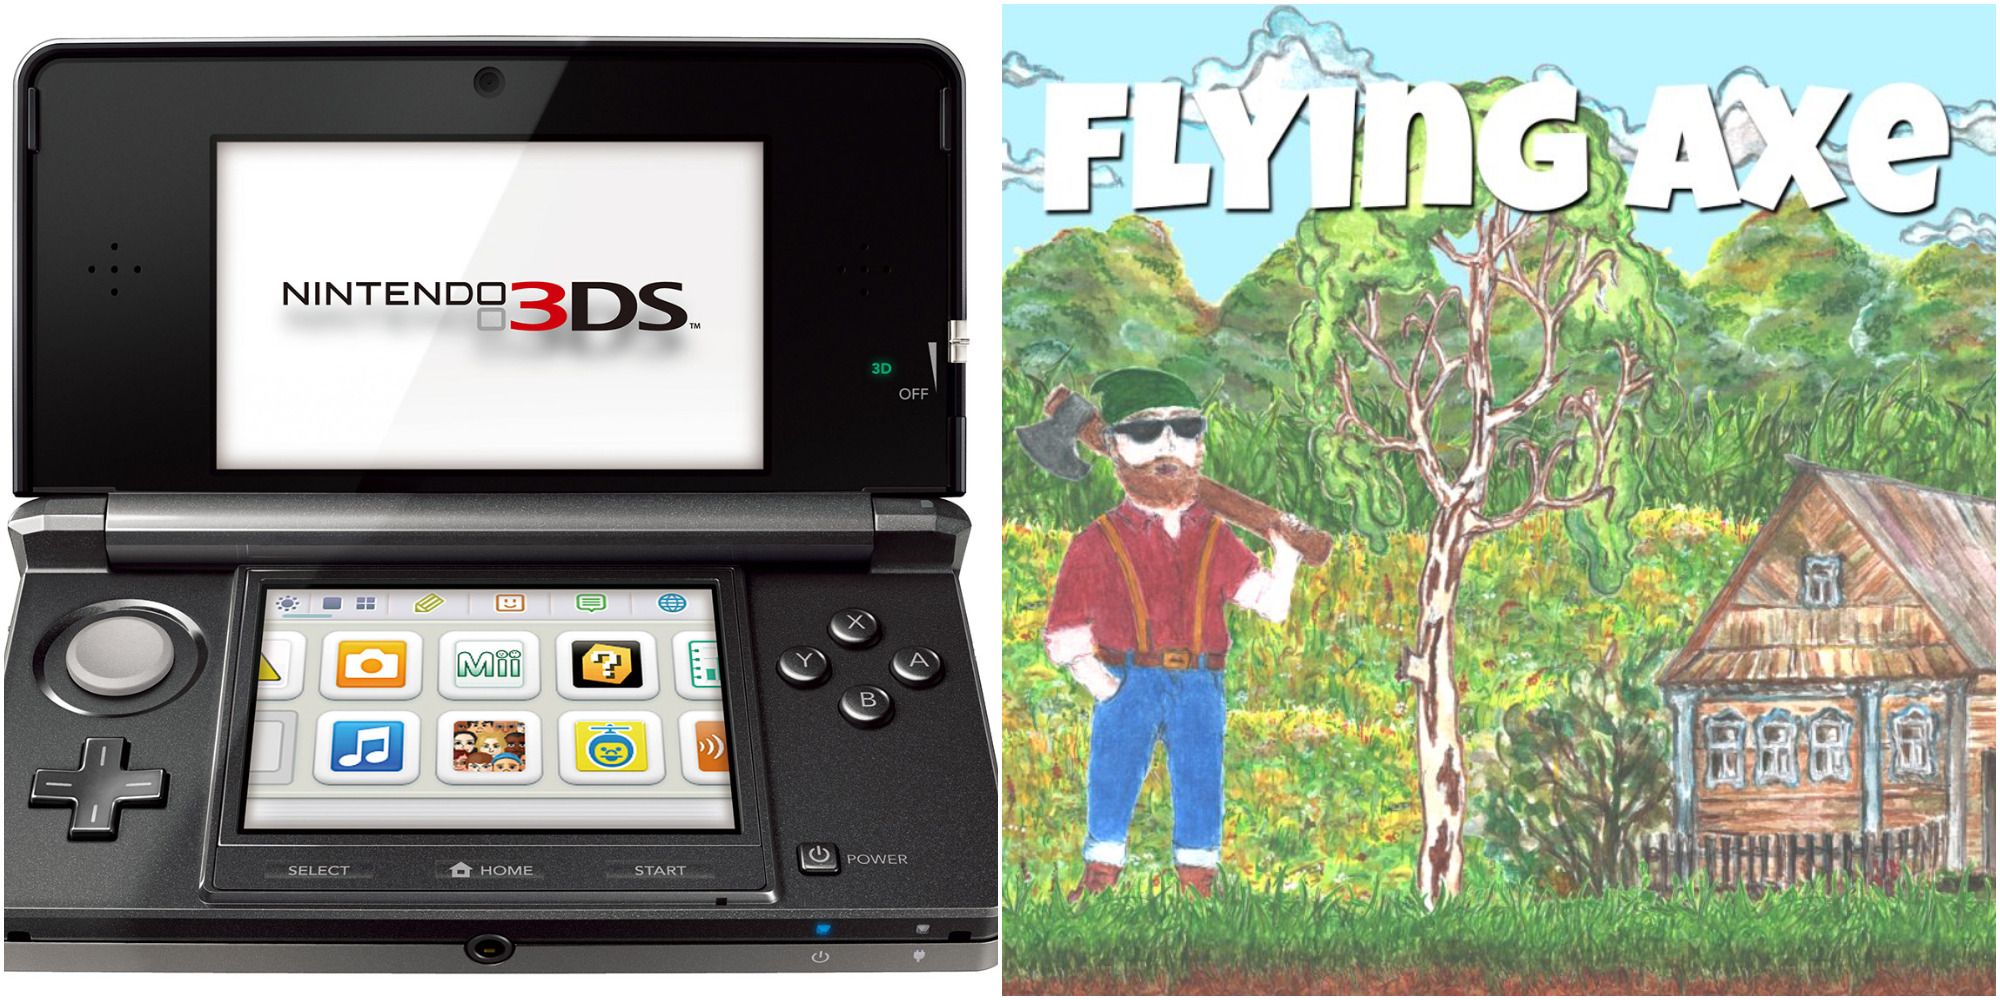 Original Nintendo 3DS Console & Flying Axe Art